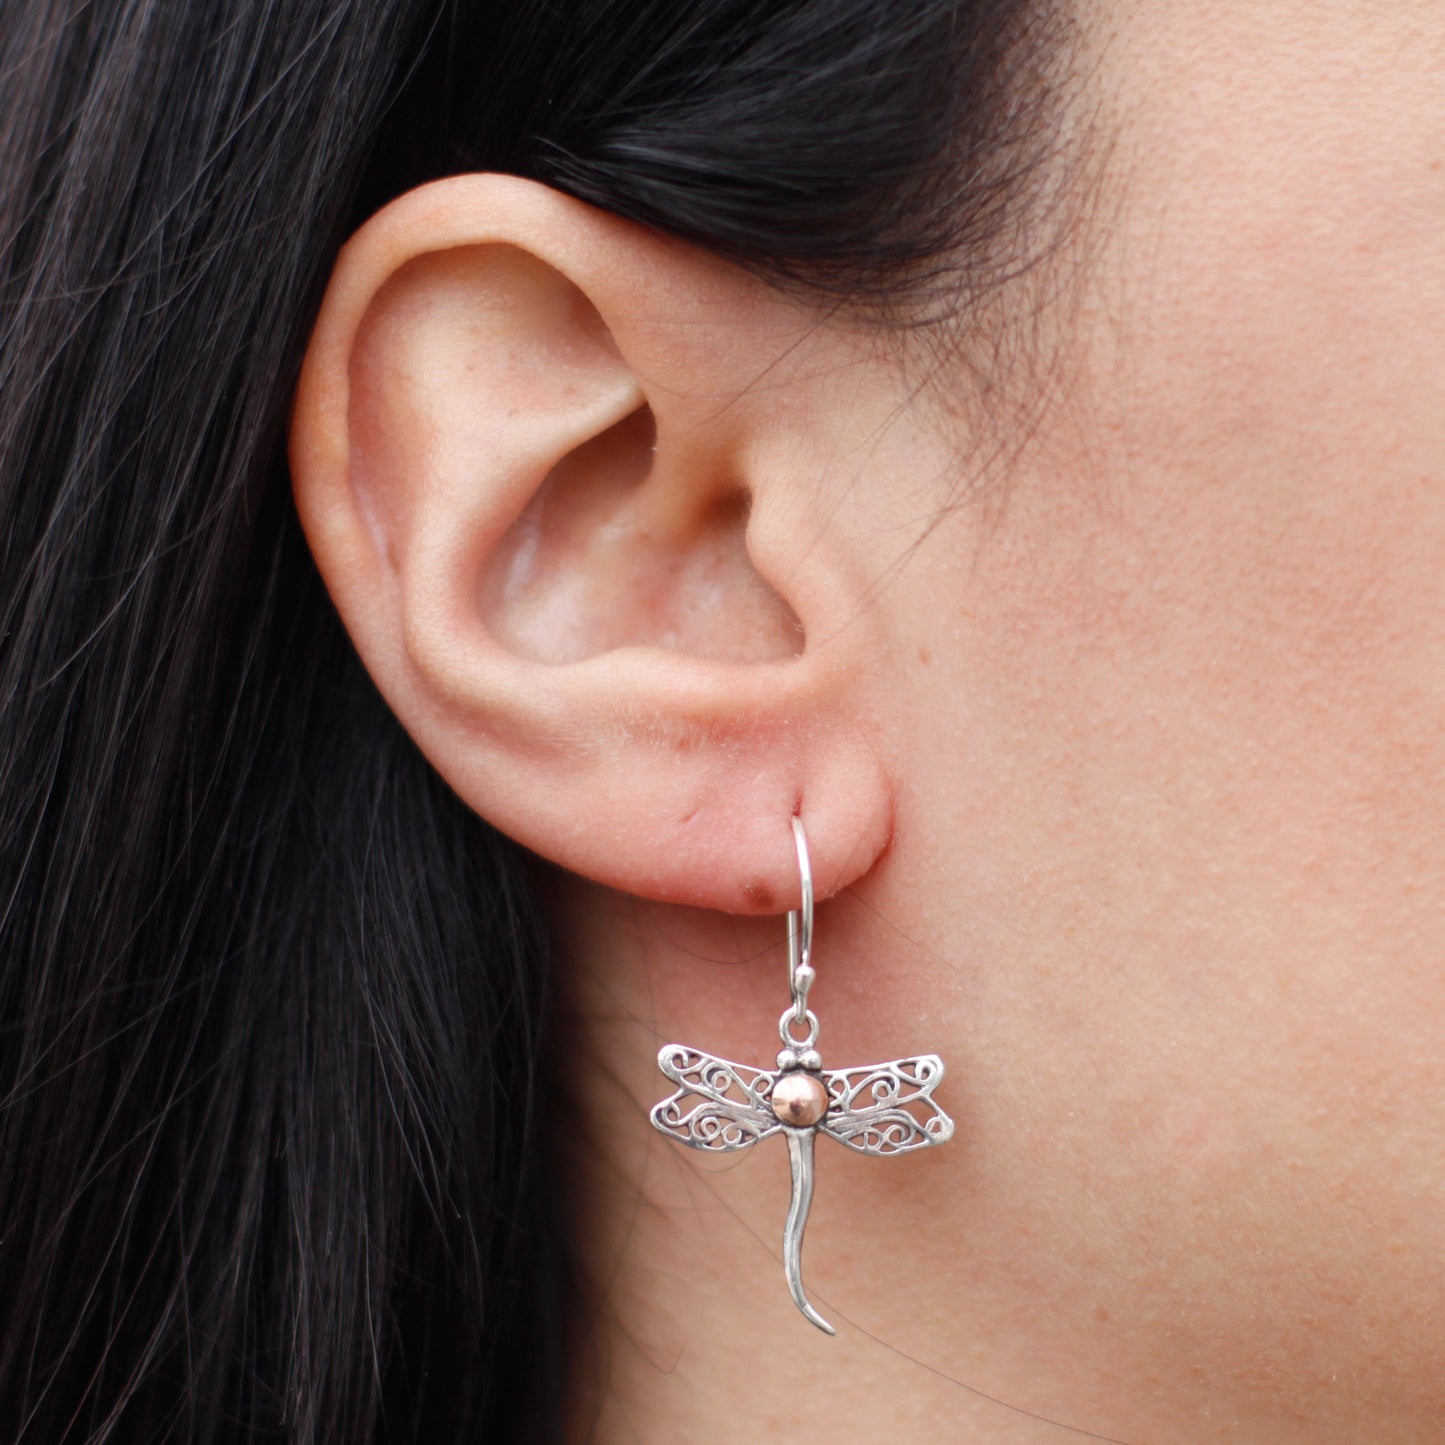 Silver & Gold Earrings - Dragonflies - Cosmic Serenity Shop